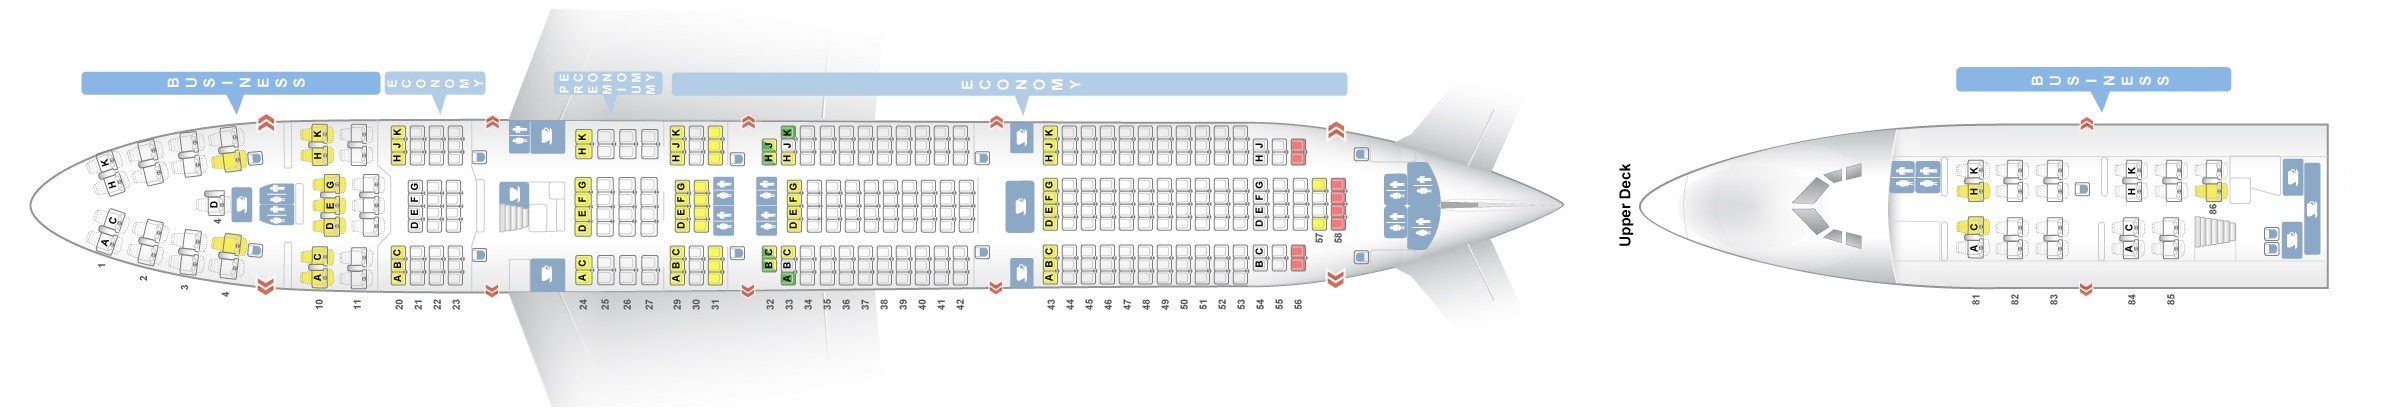 Lufthansa Boeing 744 Jet Seating Chart